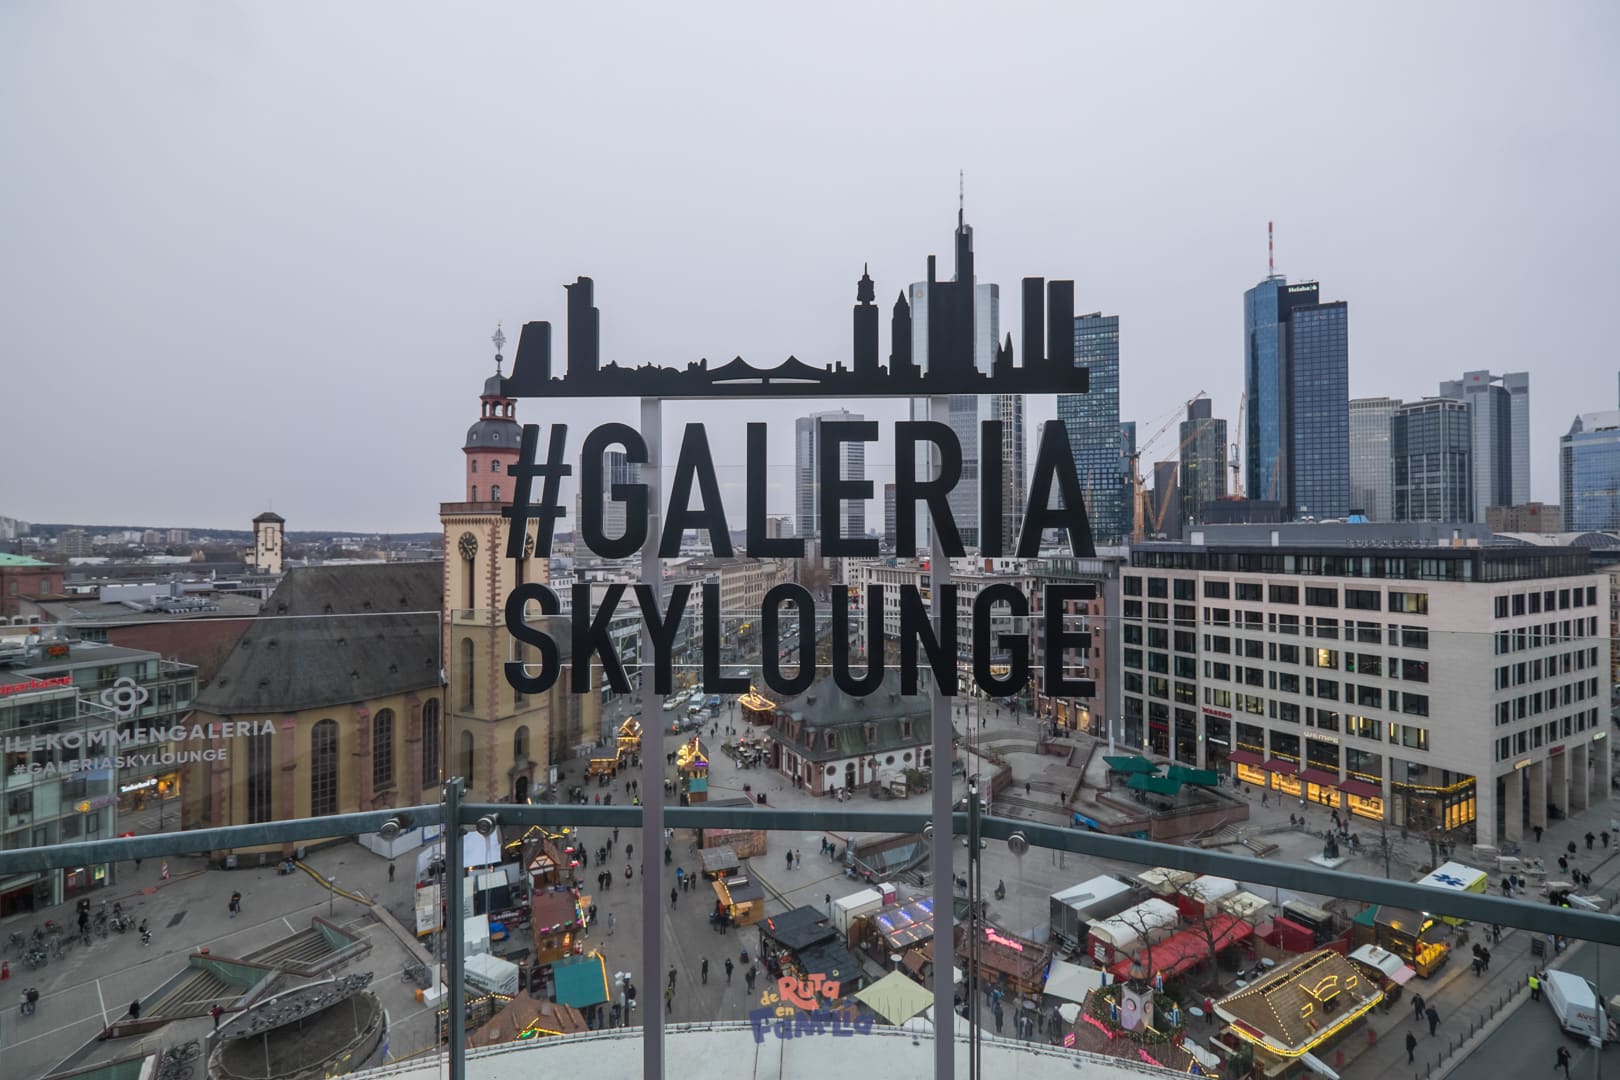 Galeria Skylounge Frankfurt